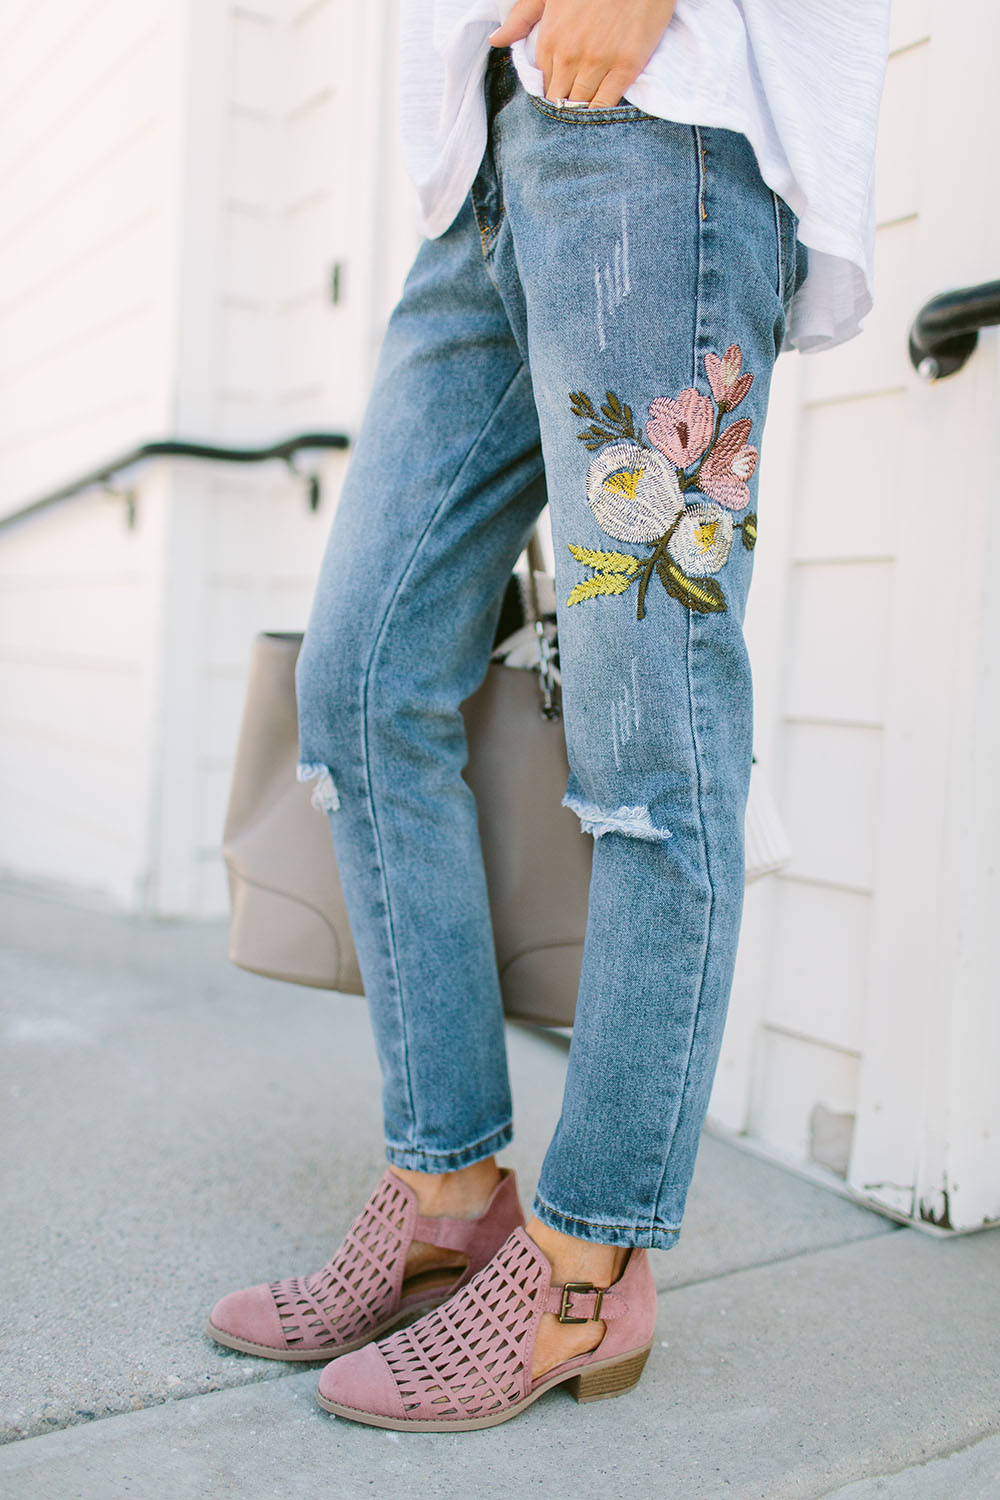 https://littlemissfearless.com/wp-content/uploads/2017/04/LittleMissFearless_how-to-wear-embroidered-jeans-4.jpg